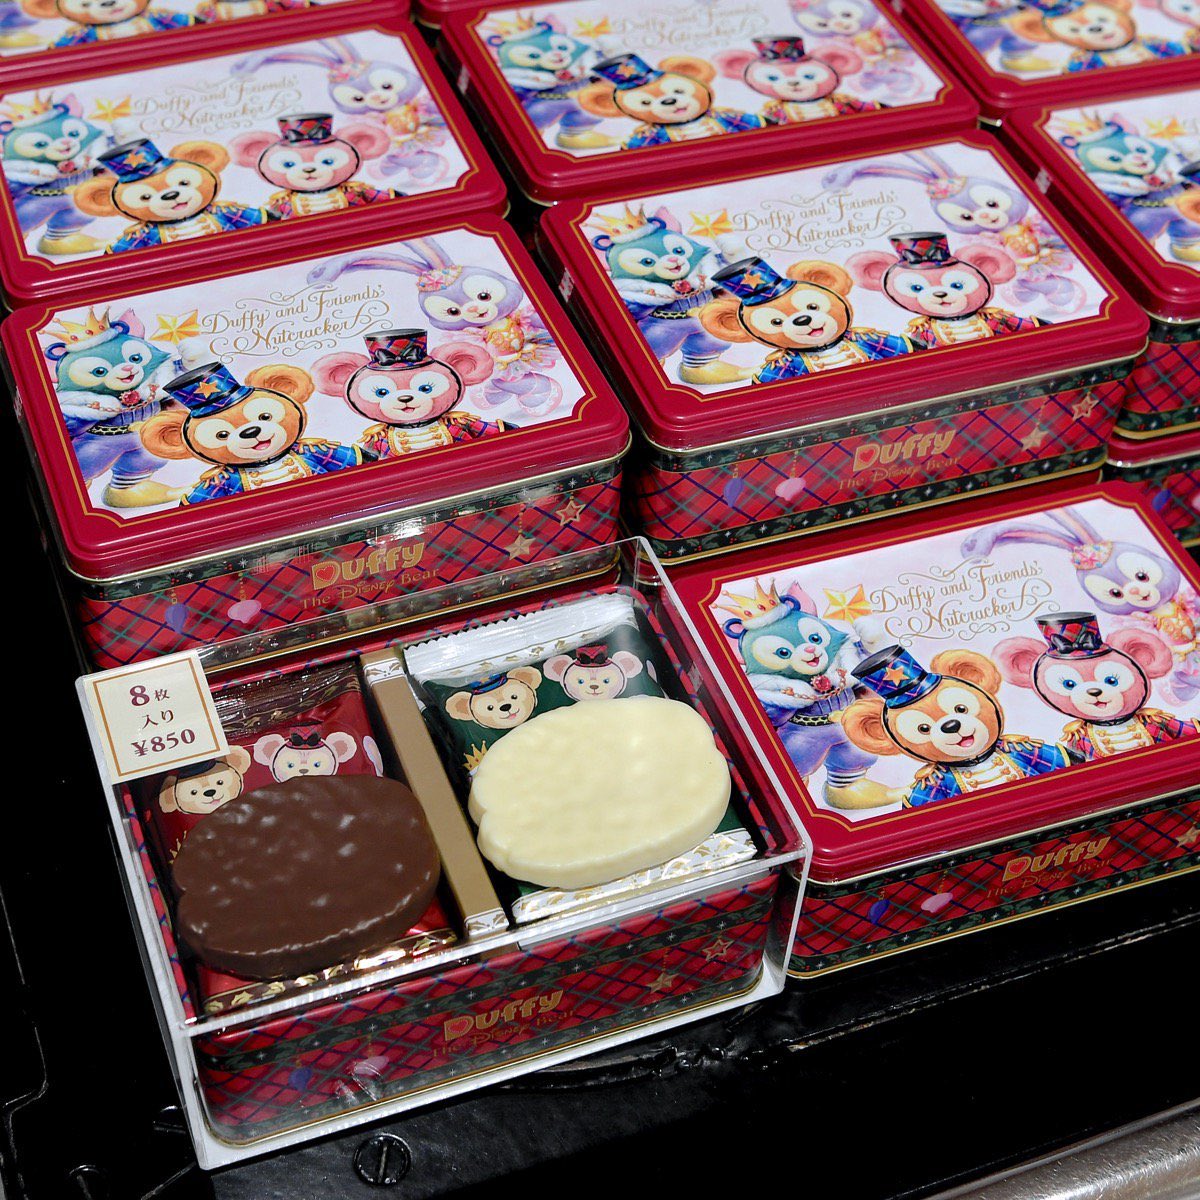 Mezzomikiのディズニーブログ テーマは くるみ割り人形 東京ディズニーシー ダッフィーのクリスマス17 お菓子のお土産発売中 詳しくは T Co Qtu3mrztqb